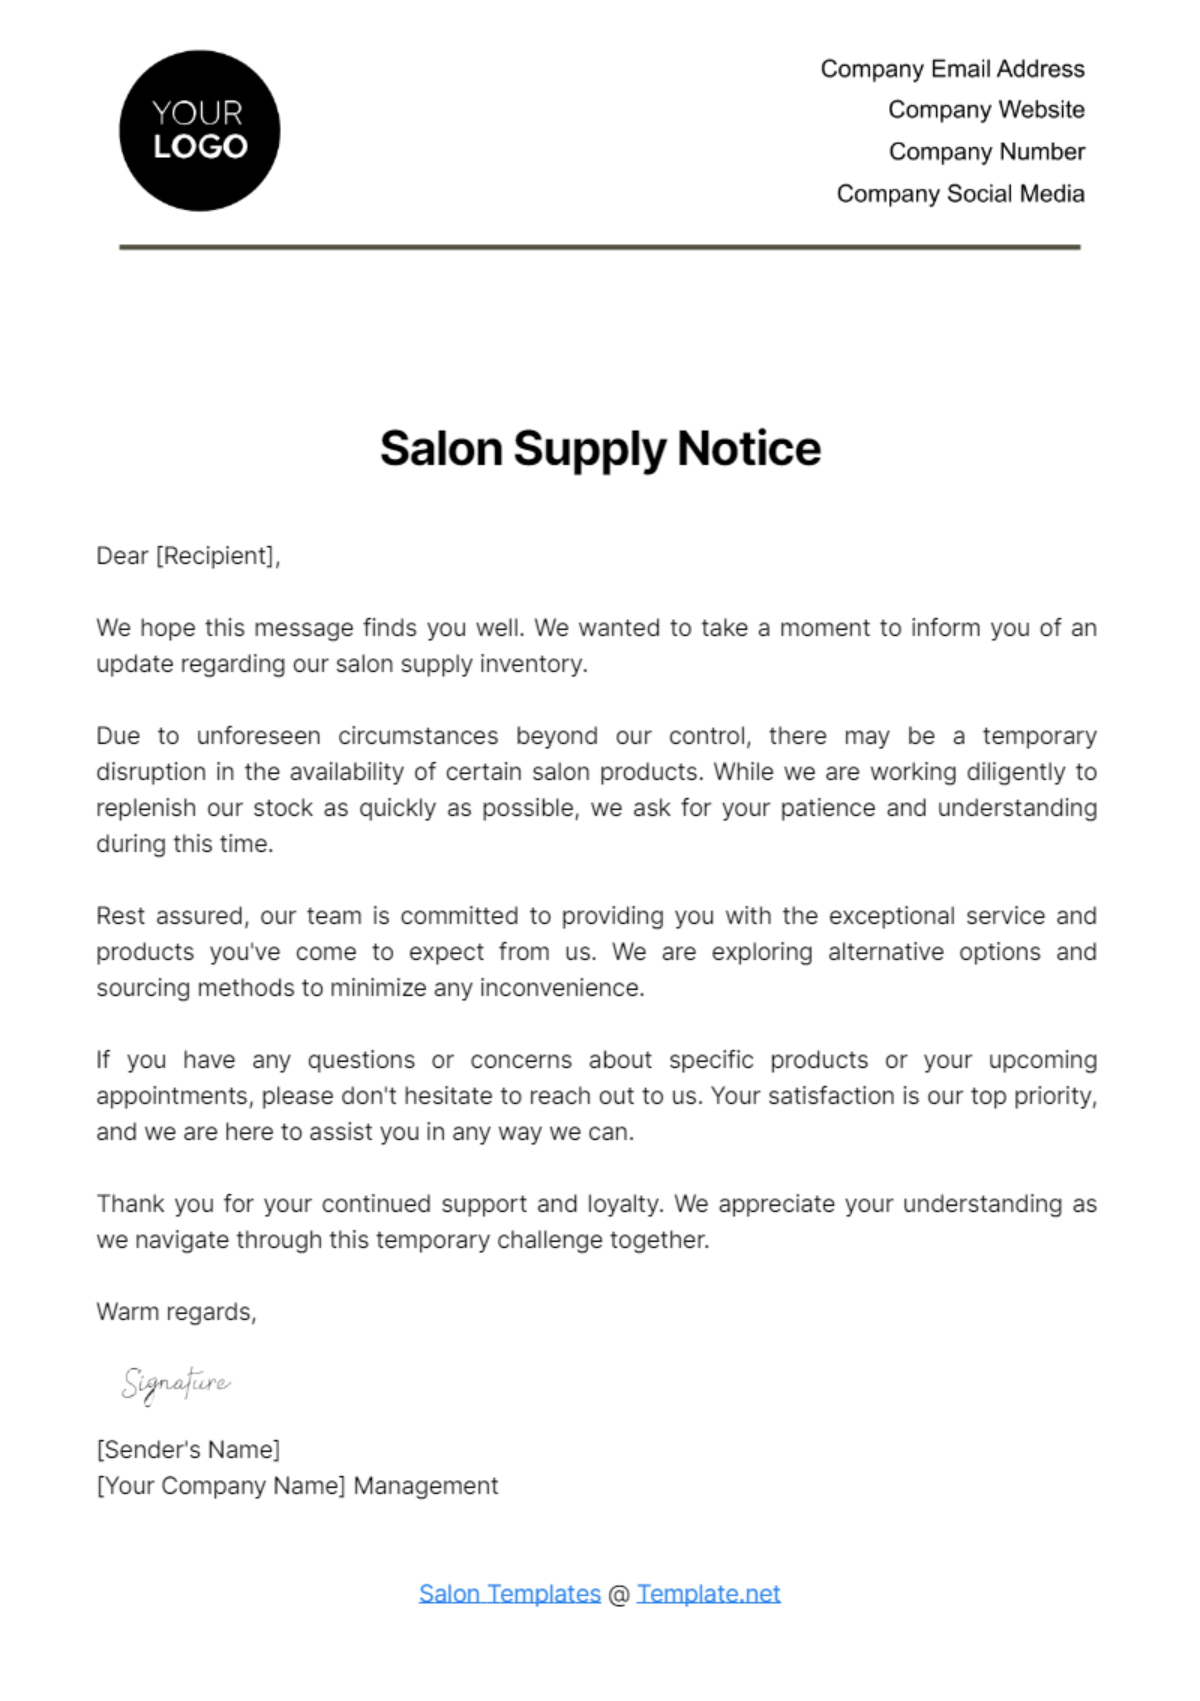 Salon Supply Notice Template